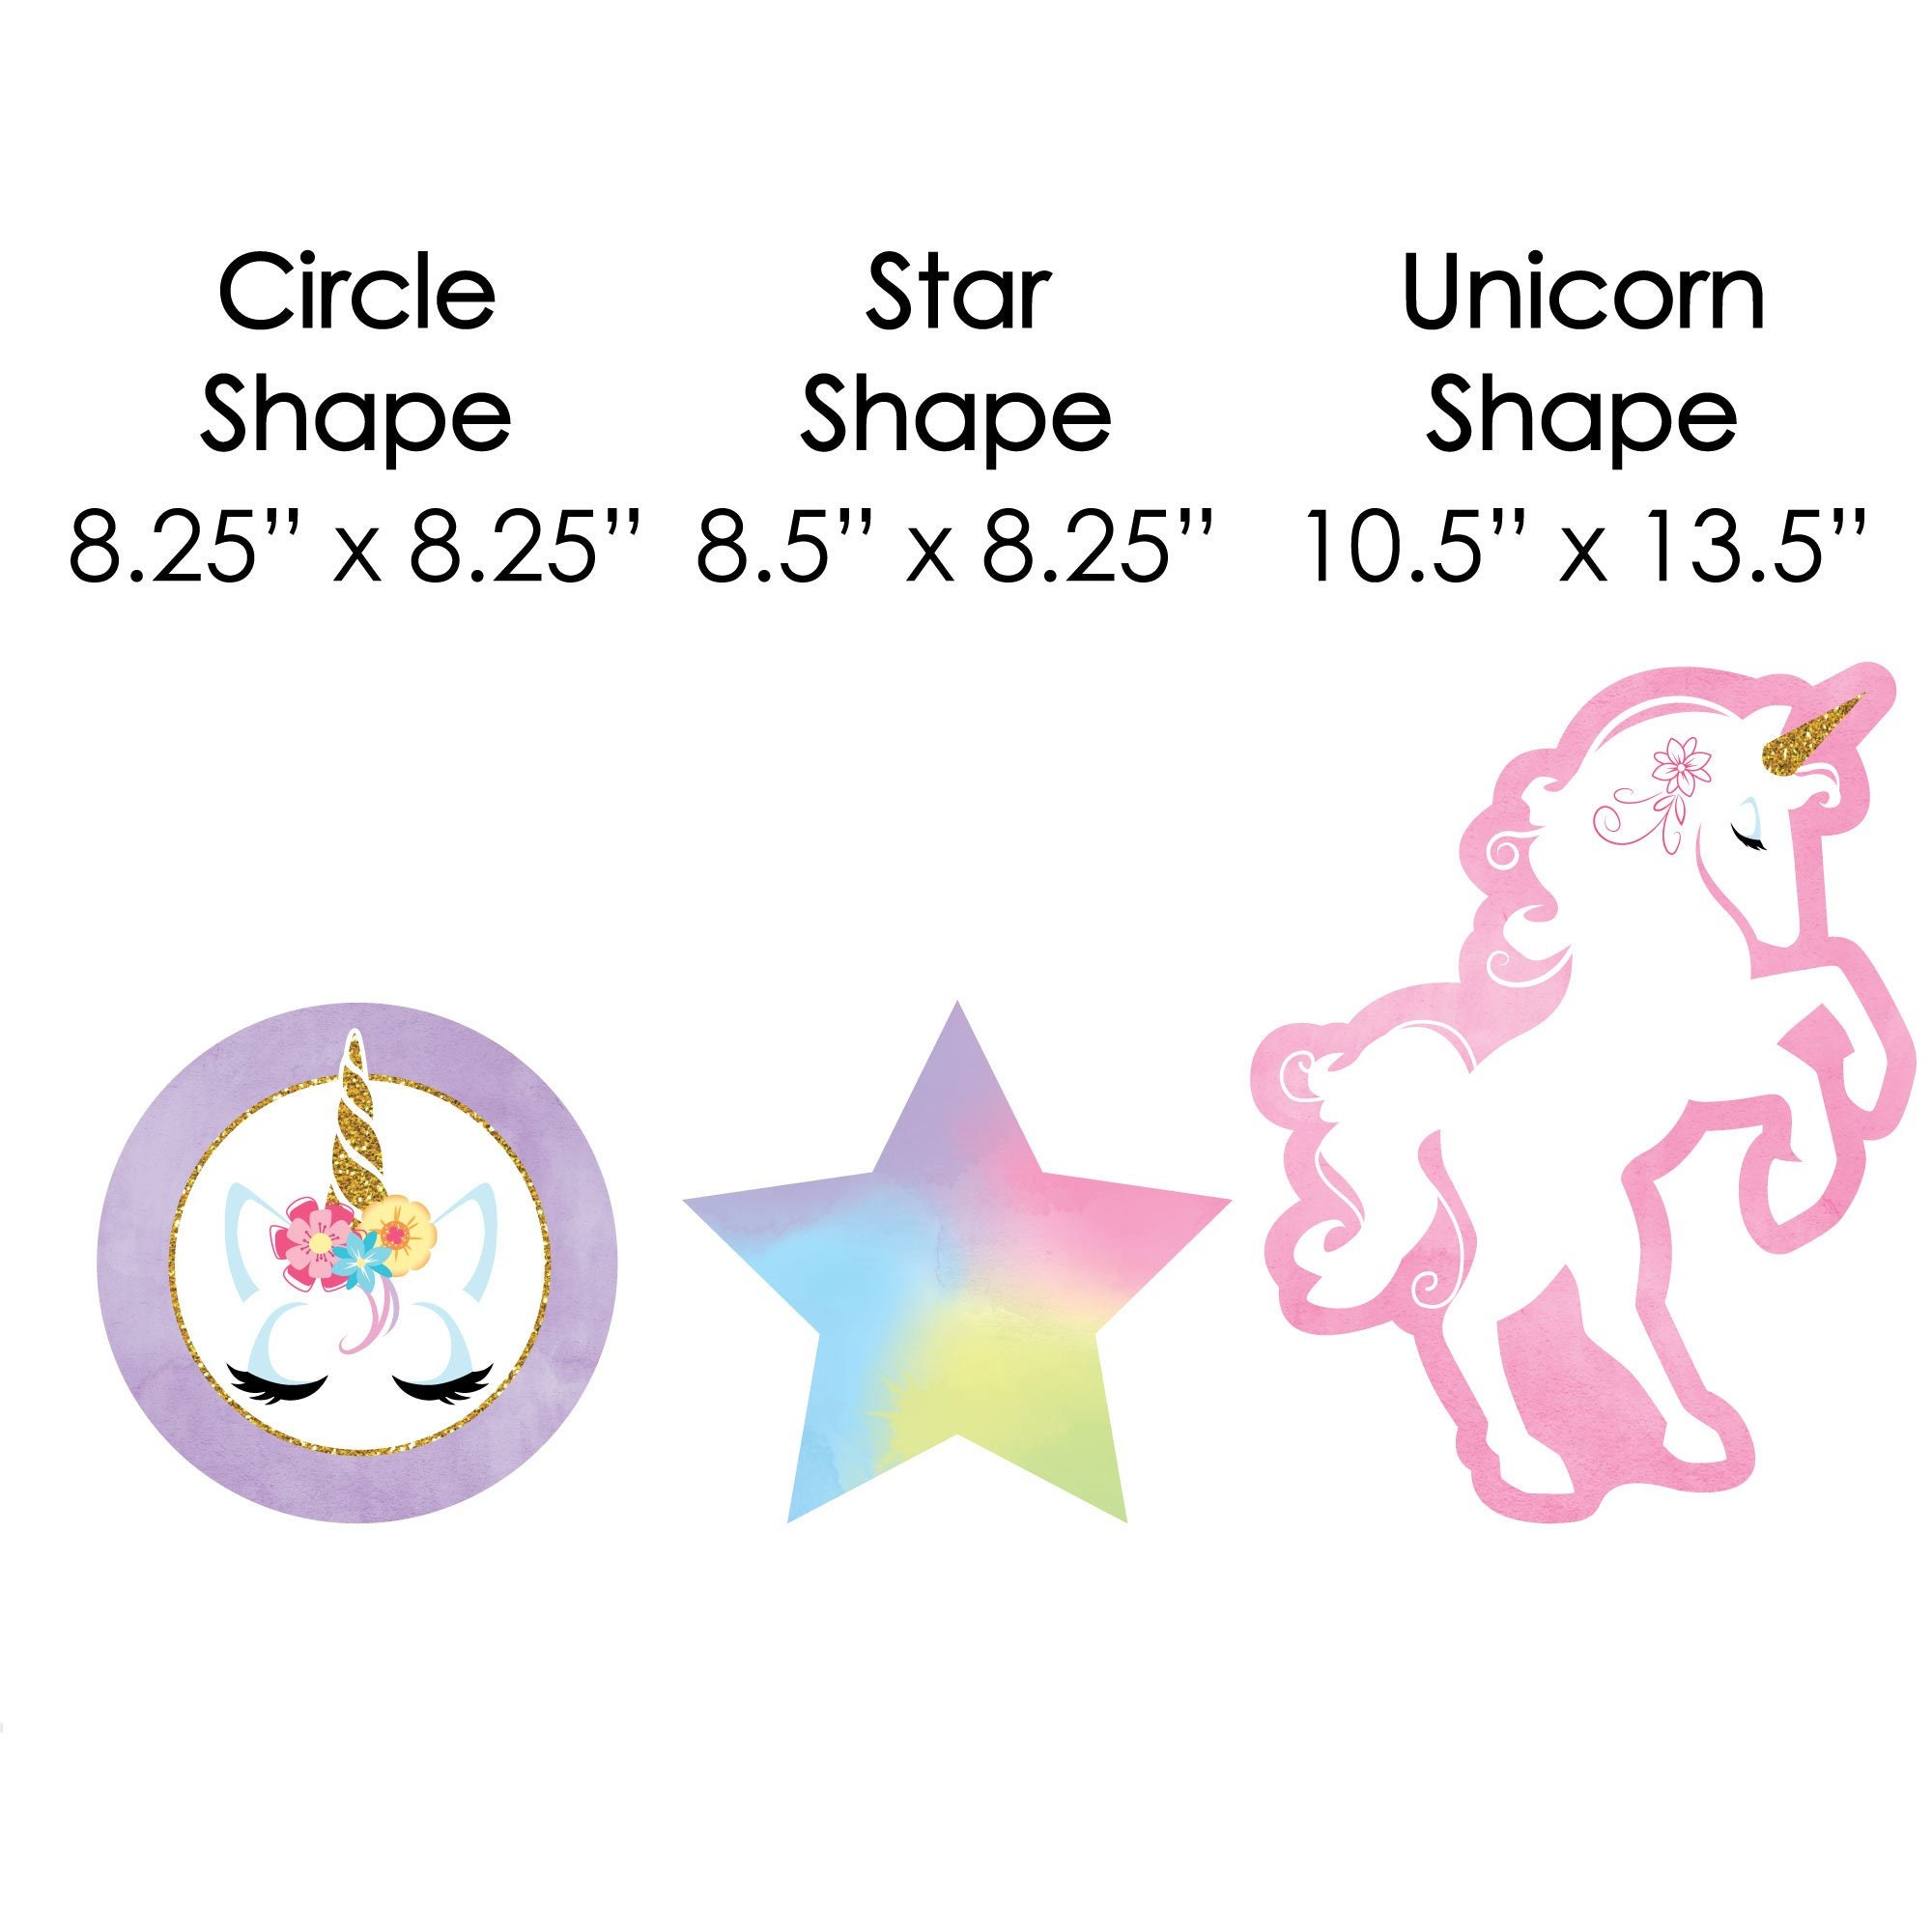 Rainbow Unicorn - Star and Unicorn Lawn Decor - Outdoor Magical Unicorn Baby Shower or Birthday Party Yard Decor - 10 ct